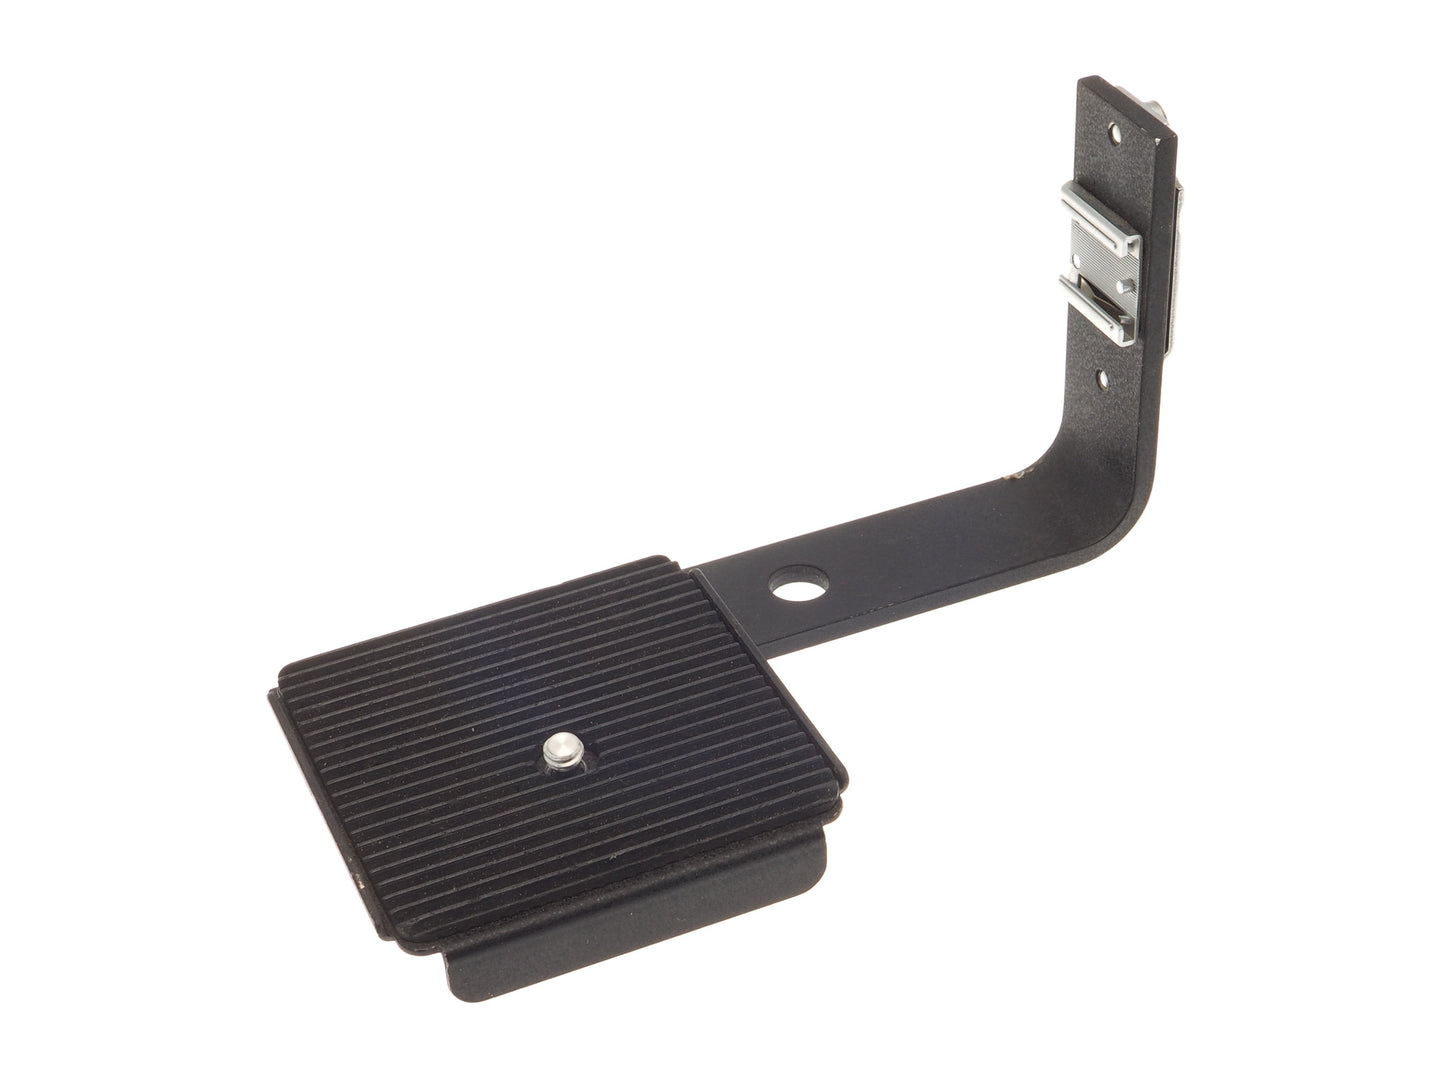 Rollei Reflex Flash Bracket With Base Plate - Accessory